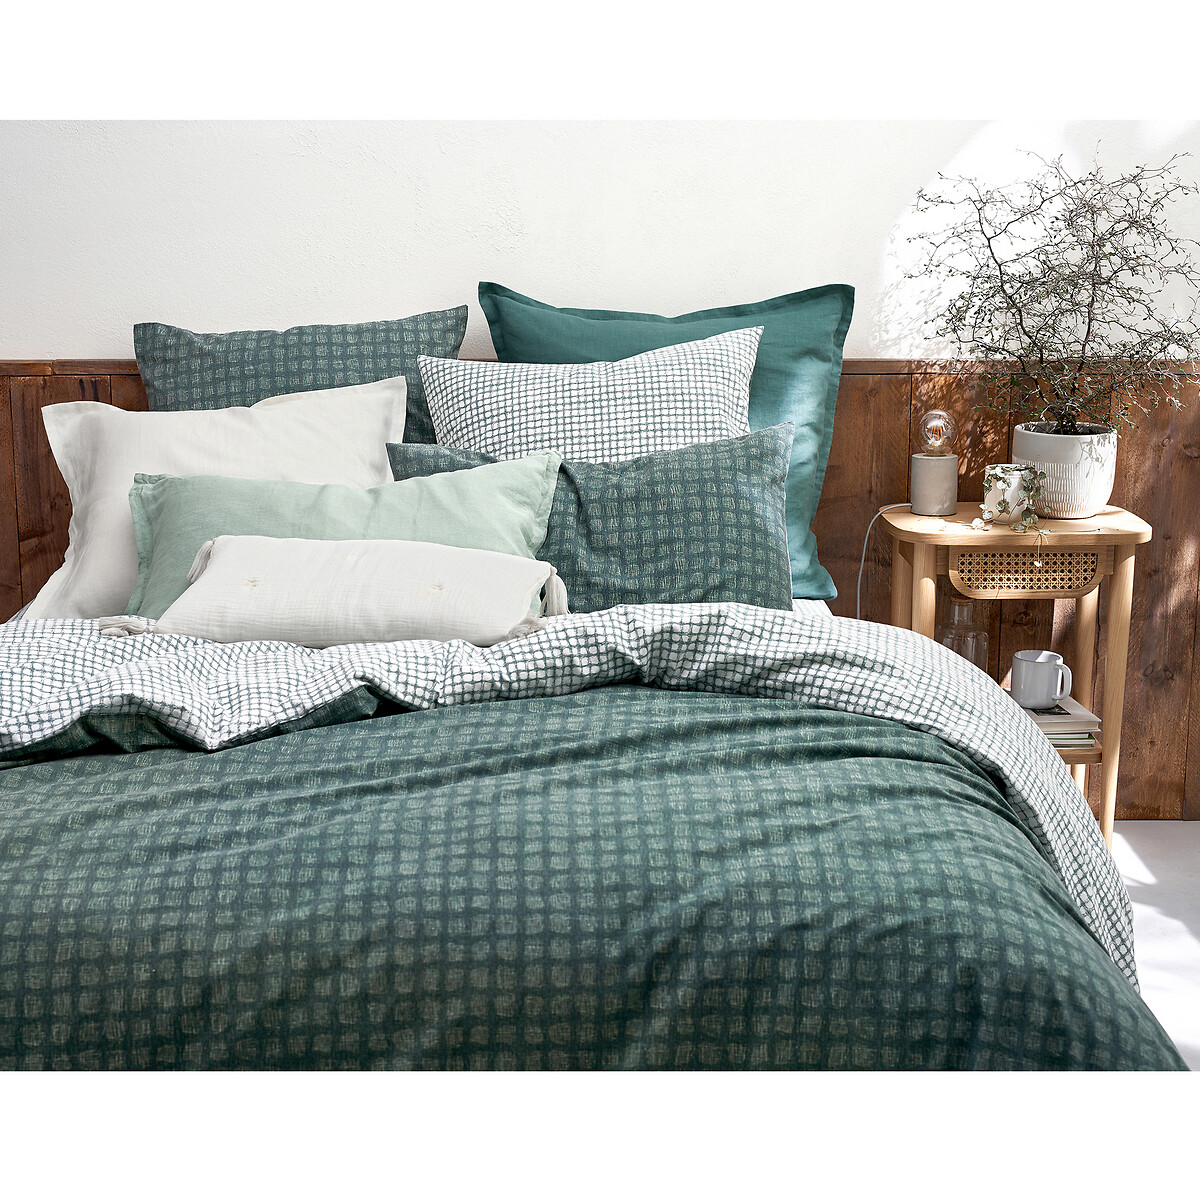 Наволочка LaRedoute чехол на подушку-валик KUMLA 50 x 30 см зеленый, размер 50 x 30 см - фото 3